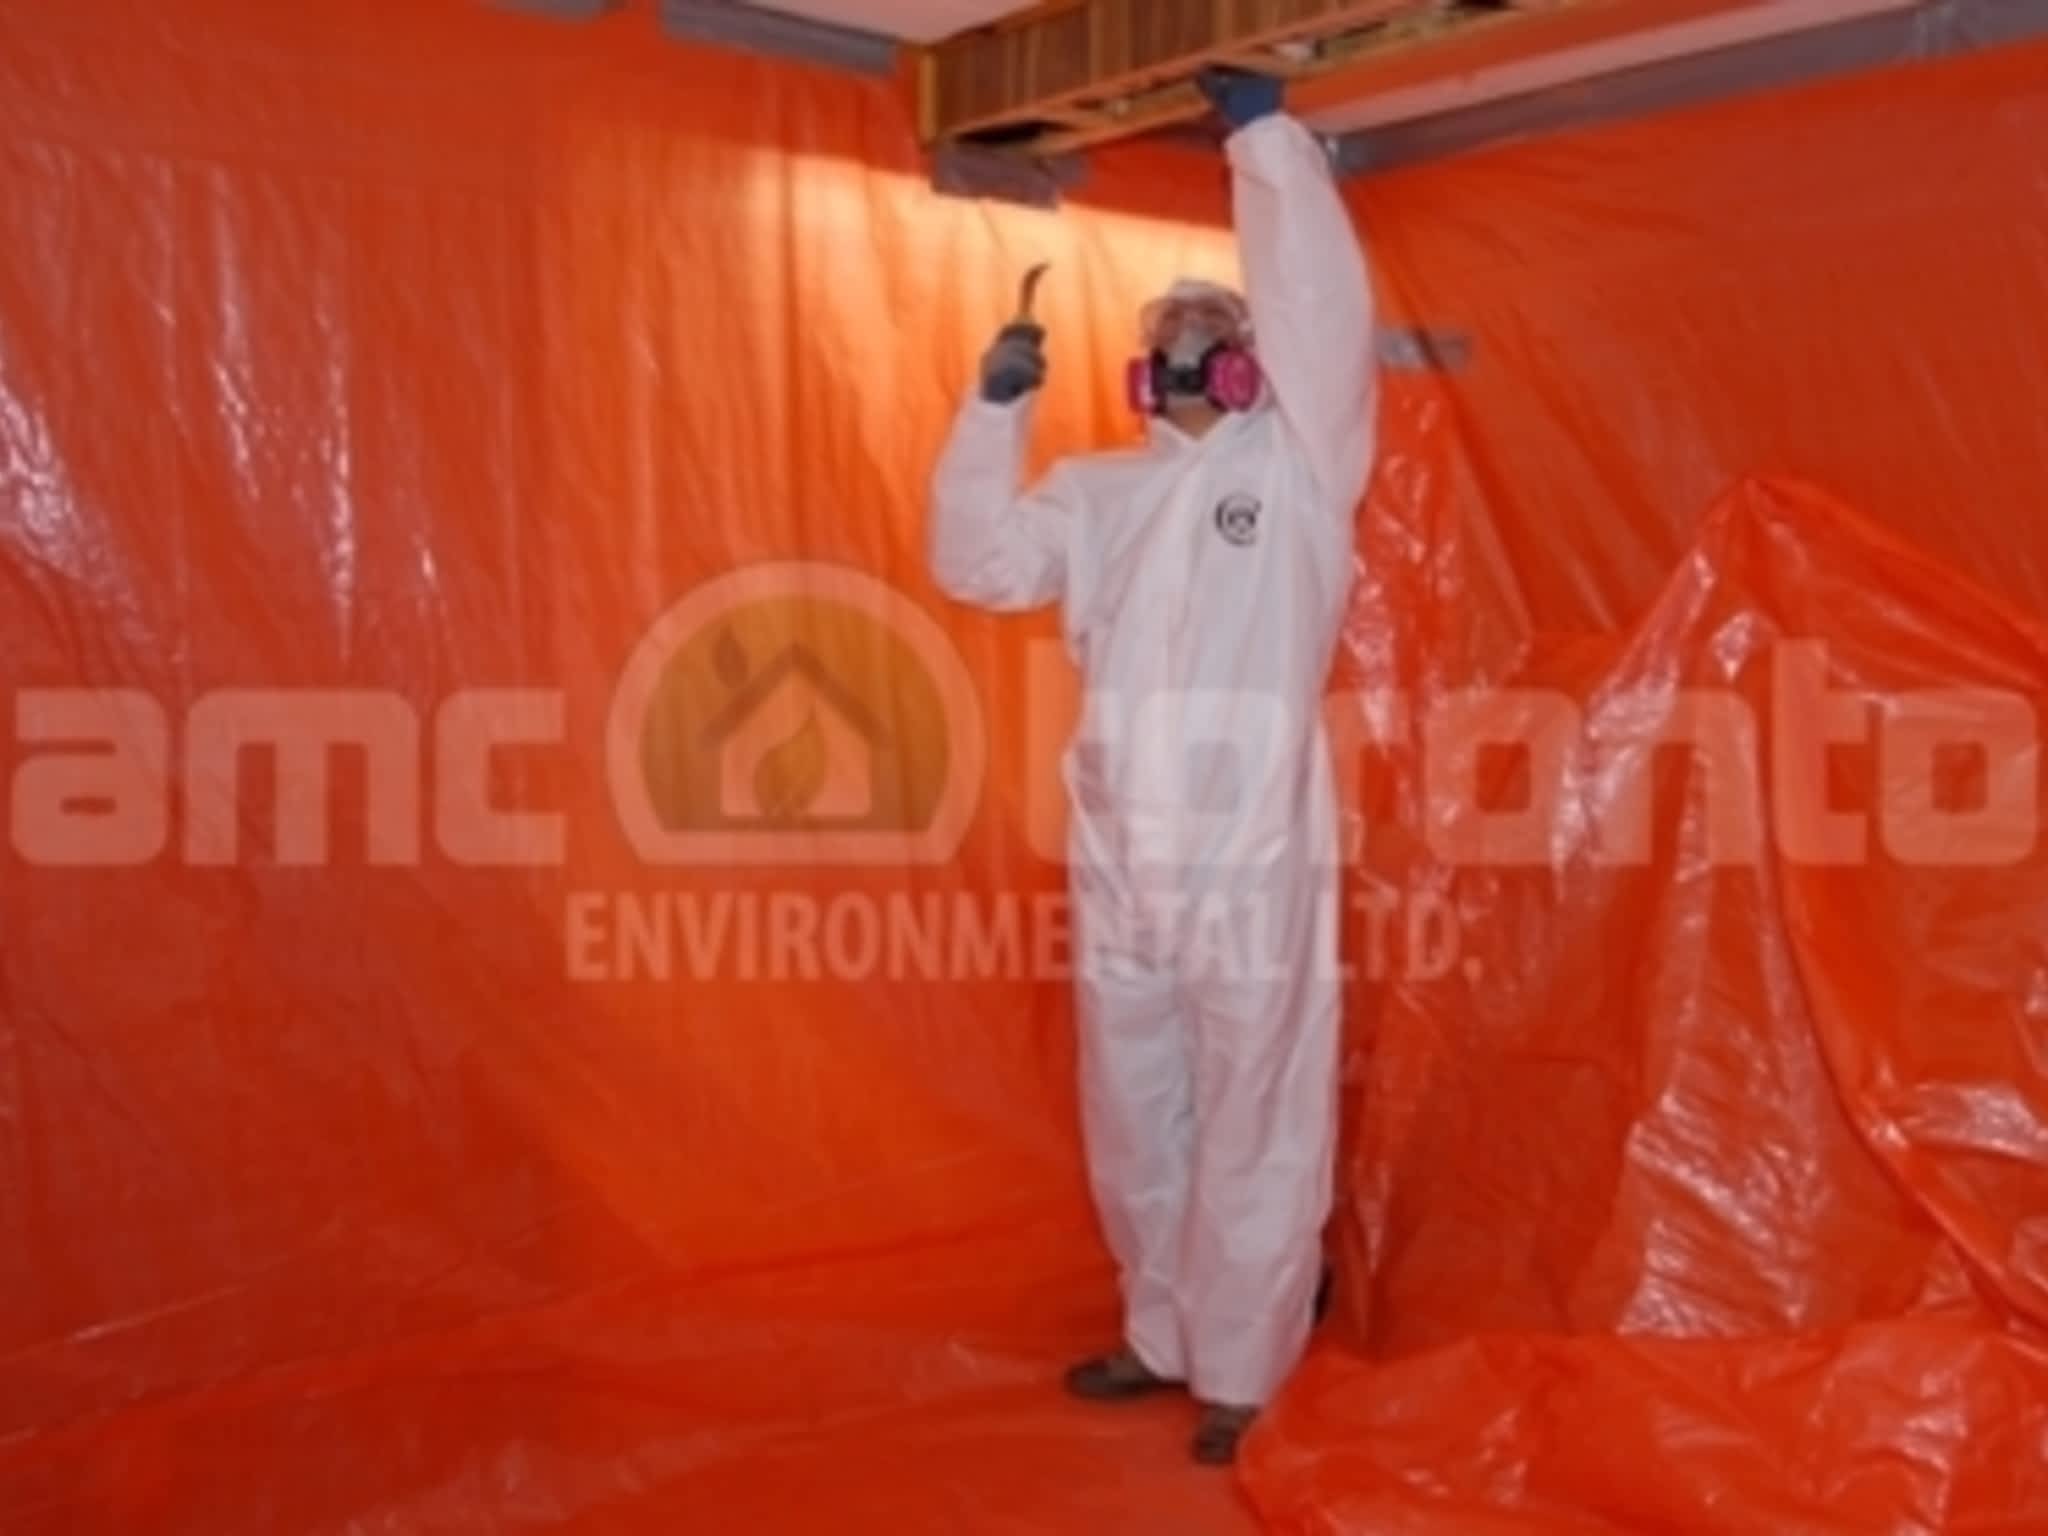 photo AMC Toronto Environmental Ltd